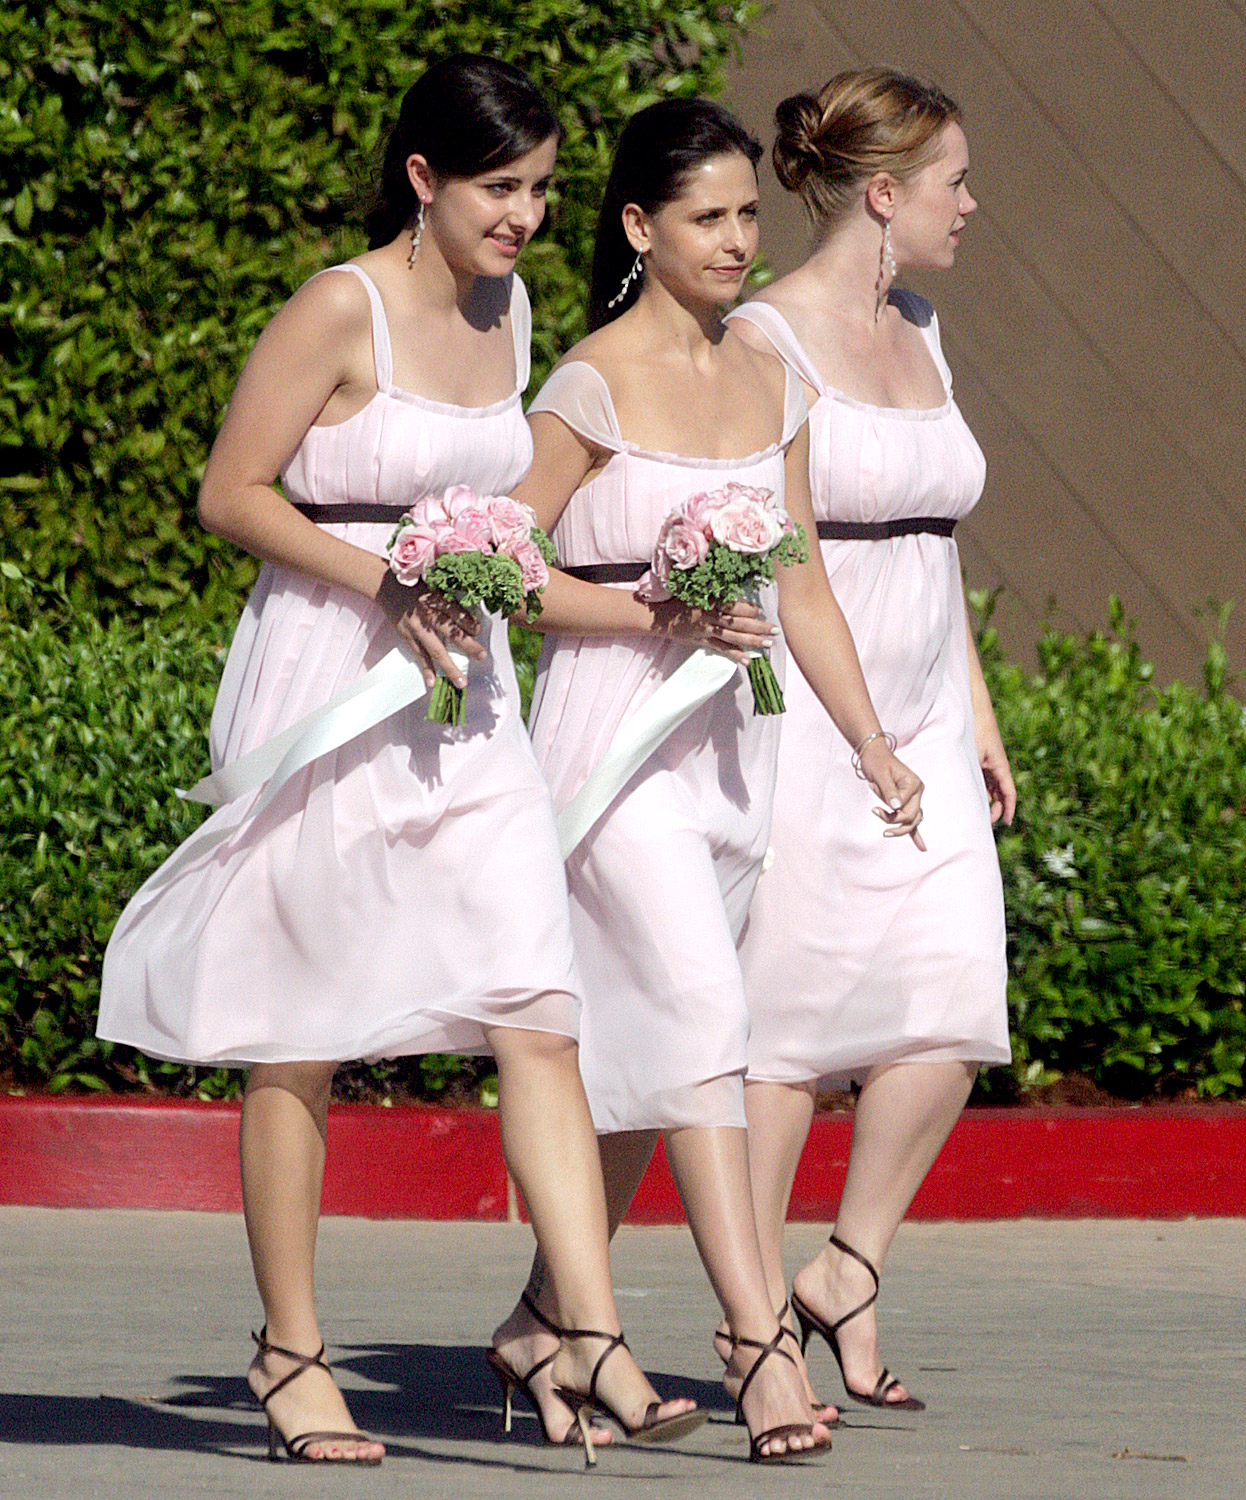 Heiress Ivy Getty's Wedding Featured Anya Taylor-Joy as Bridesmaid